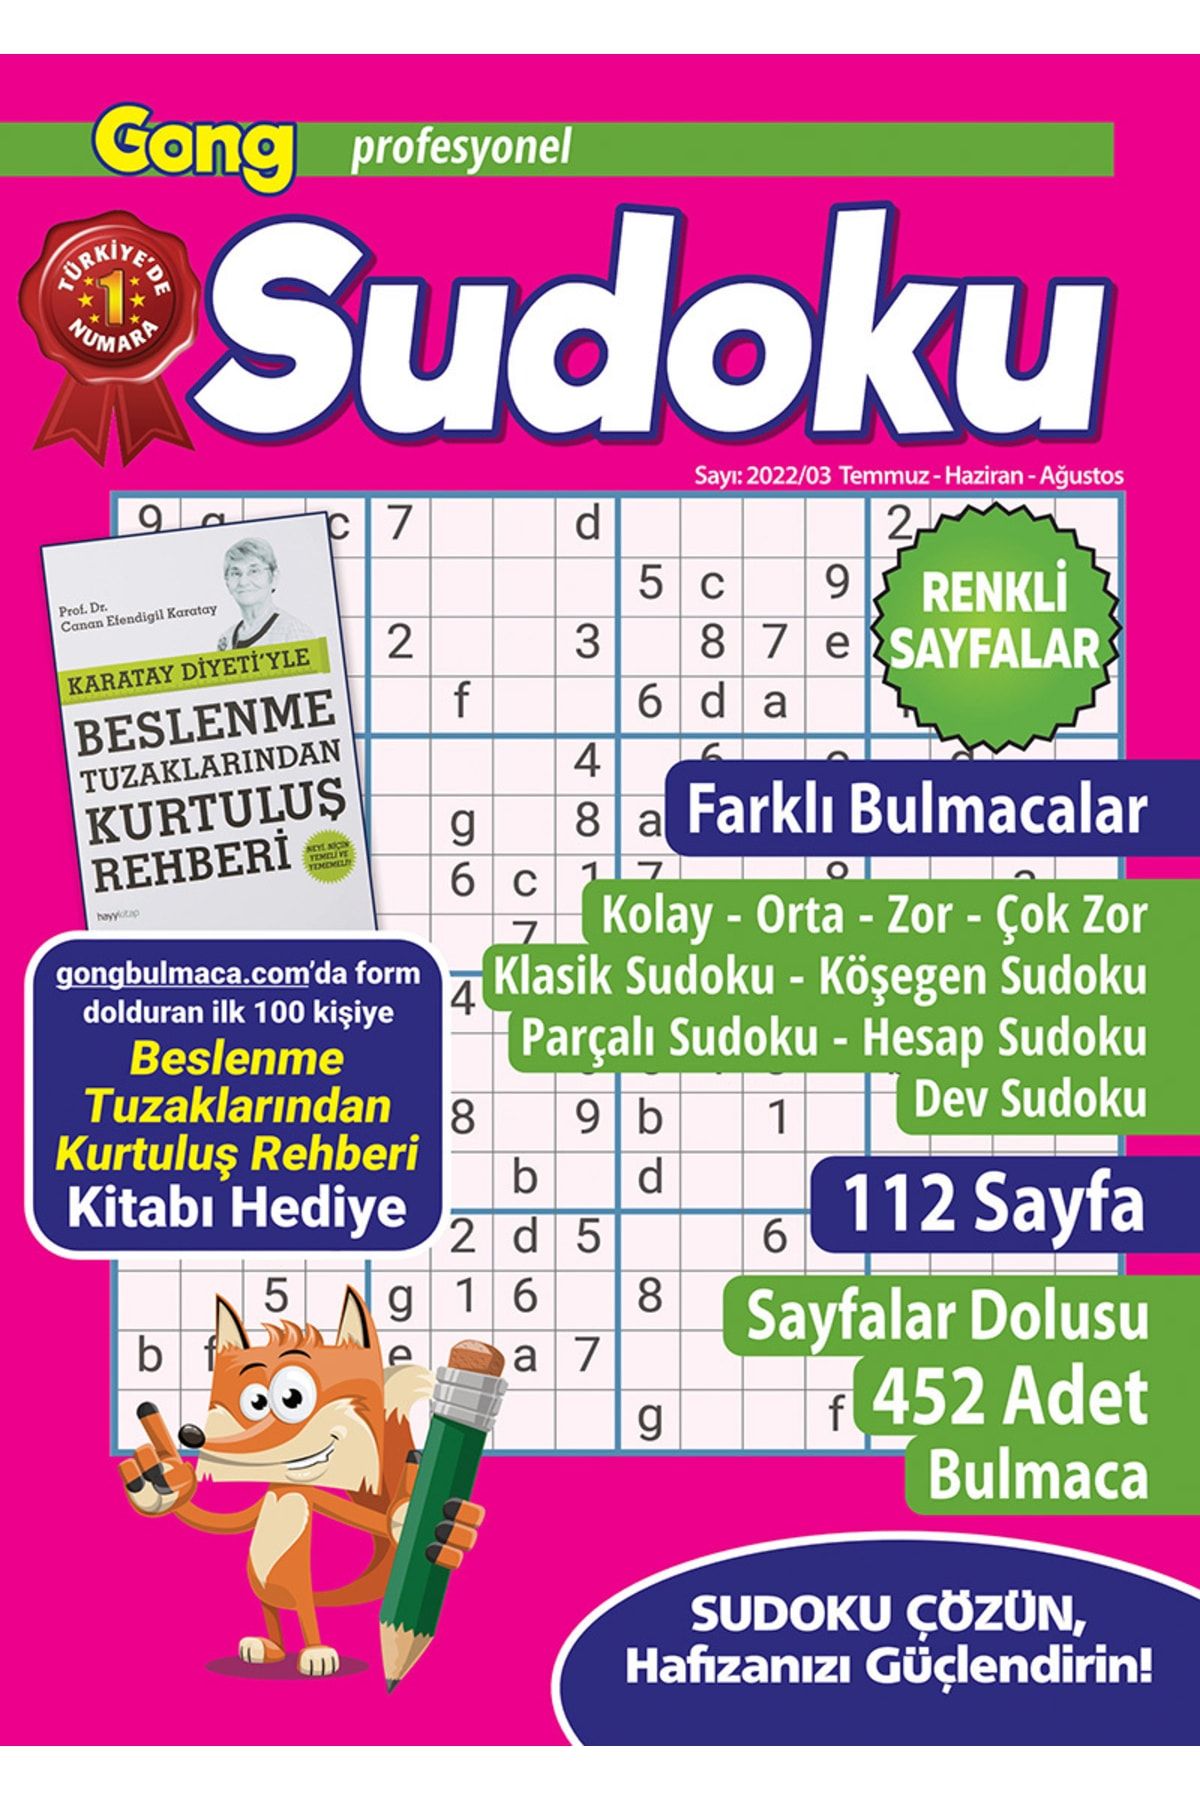 Gong Profesyonel Sudoku 011